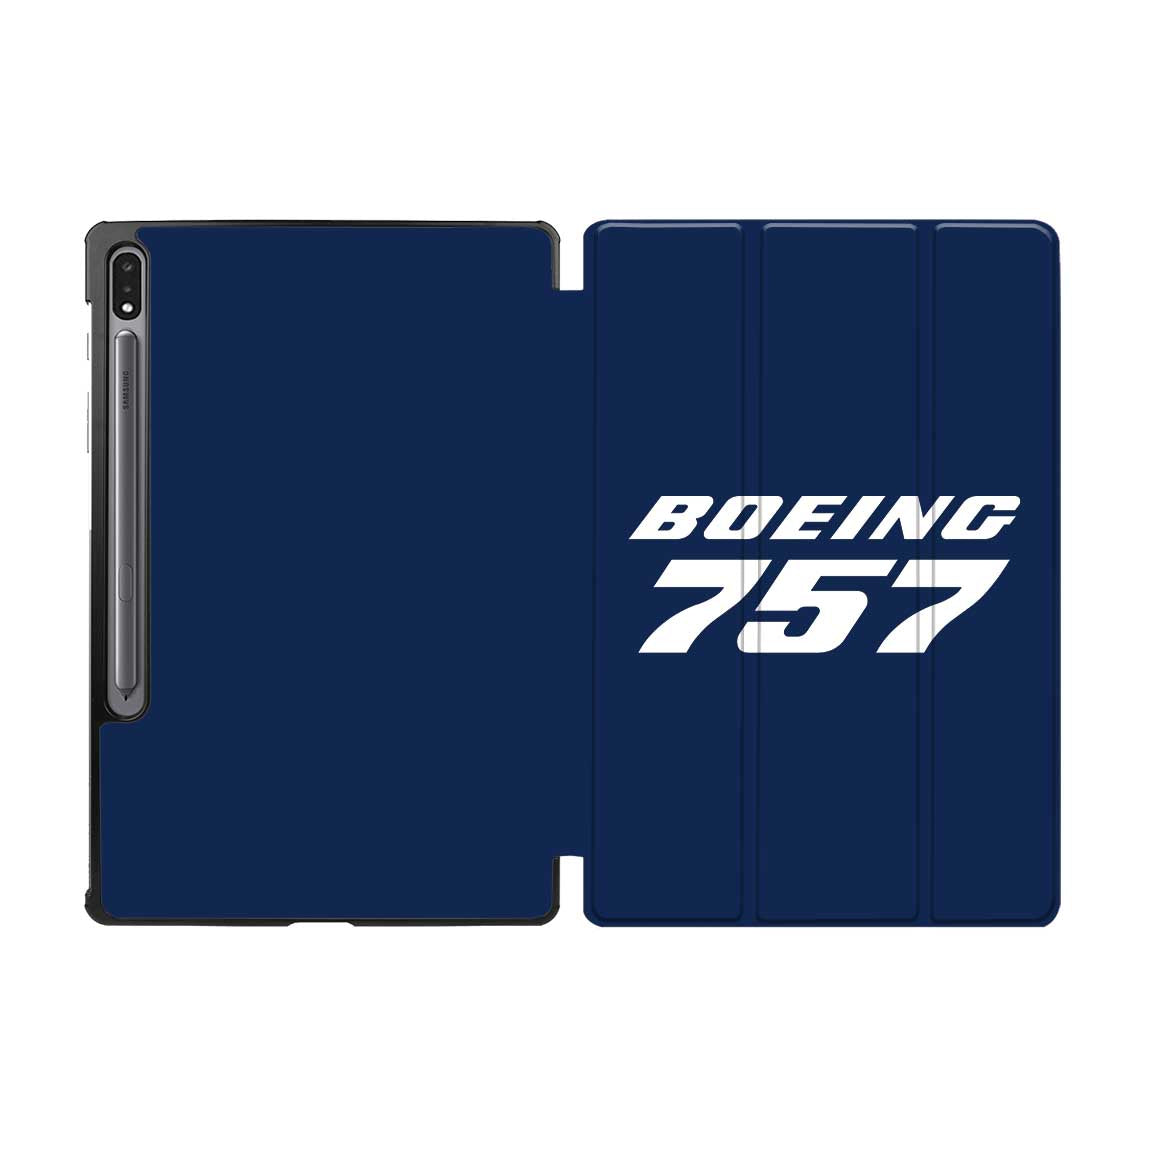 Boeing 757 & Text Designed Samsung Tablet Cases